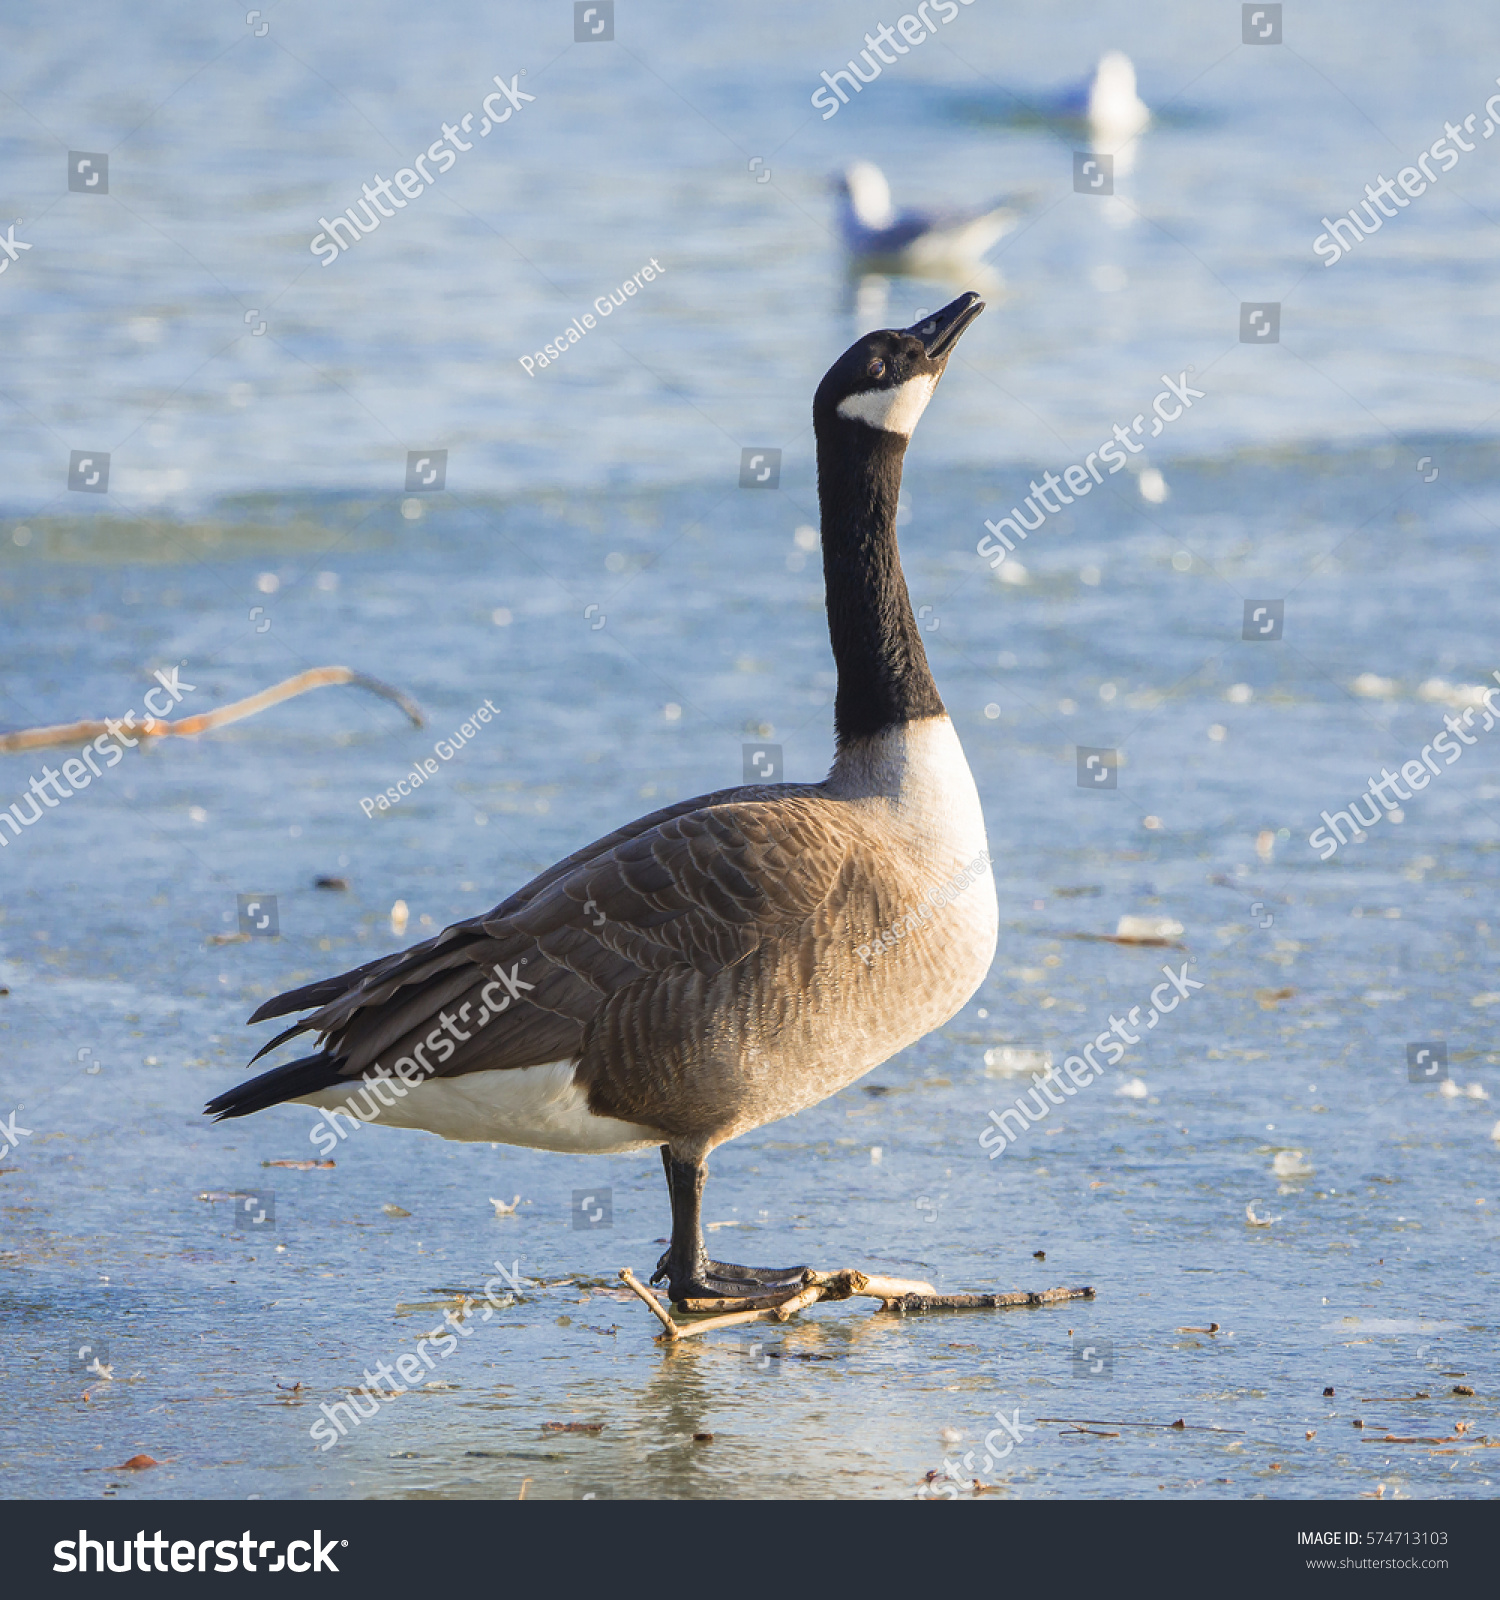 Goose in winter photo